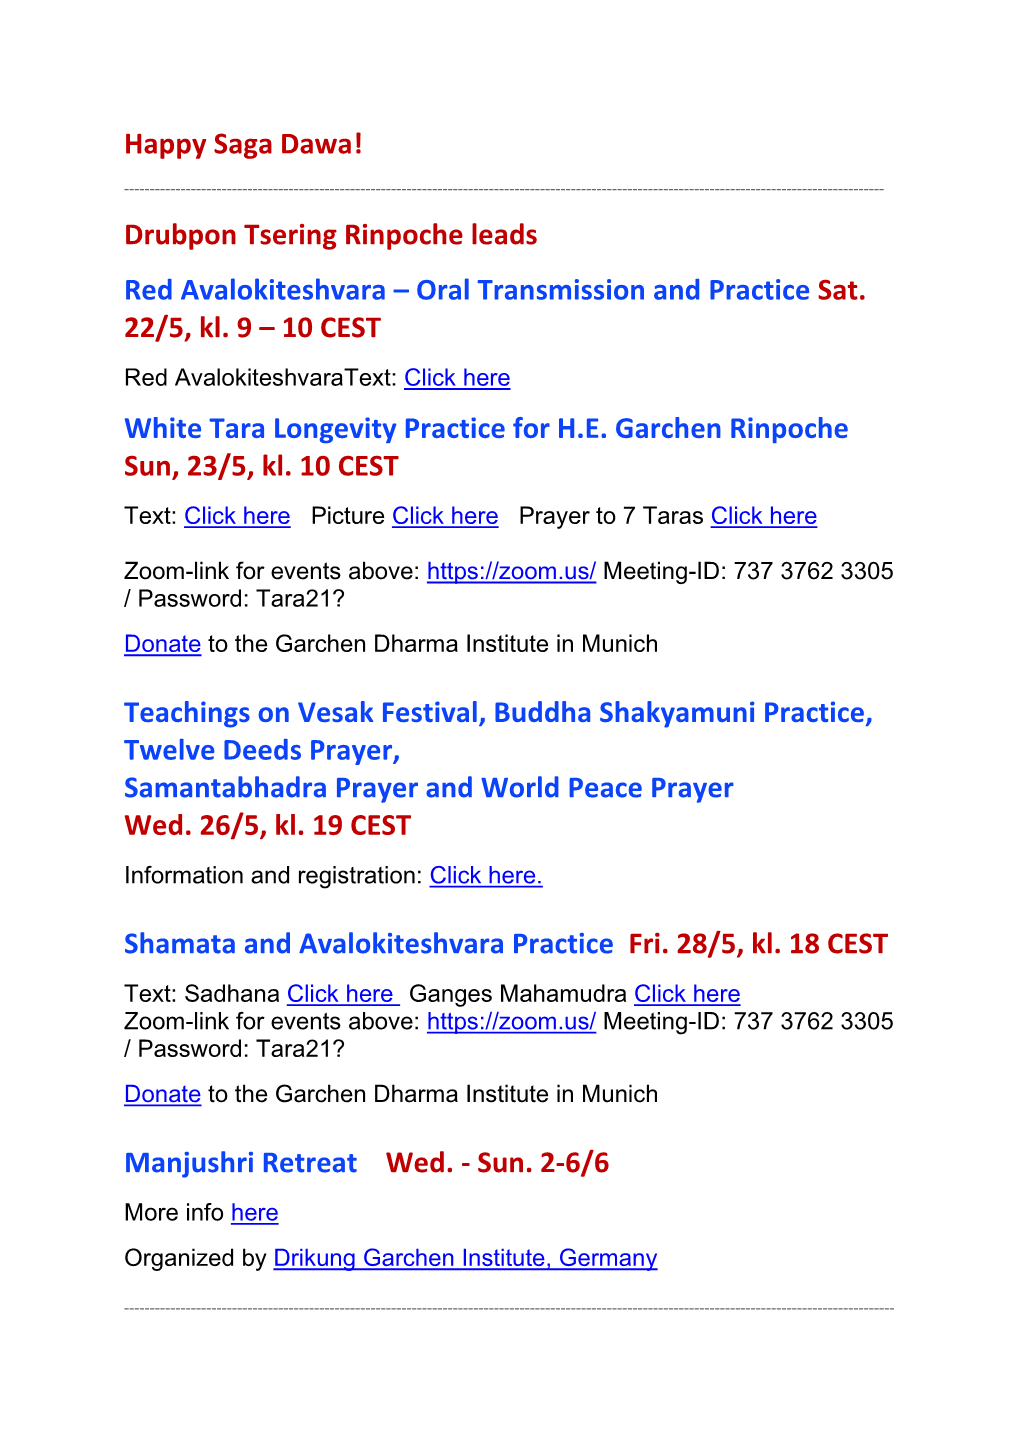 Happy Saga Dawa! Drubpon Tsering Rinpoche Leads Red Avalokiteshvara